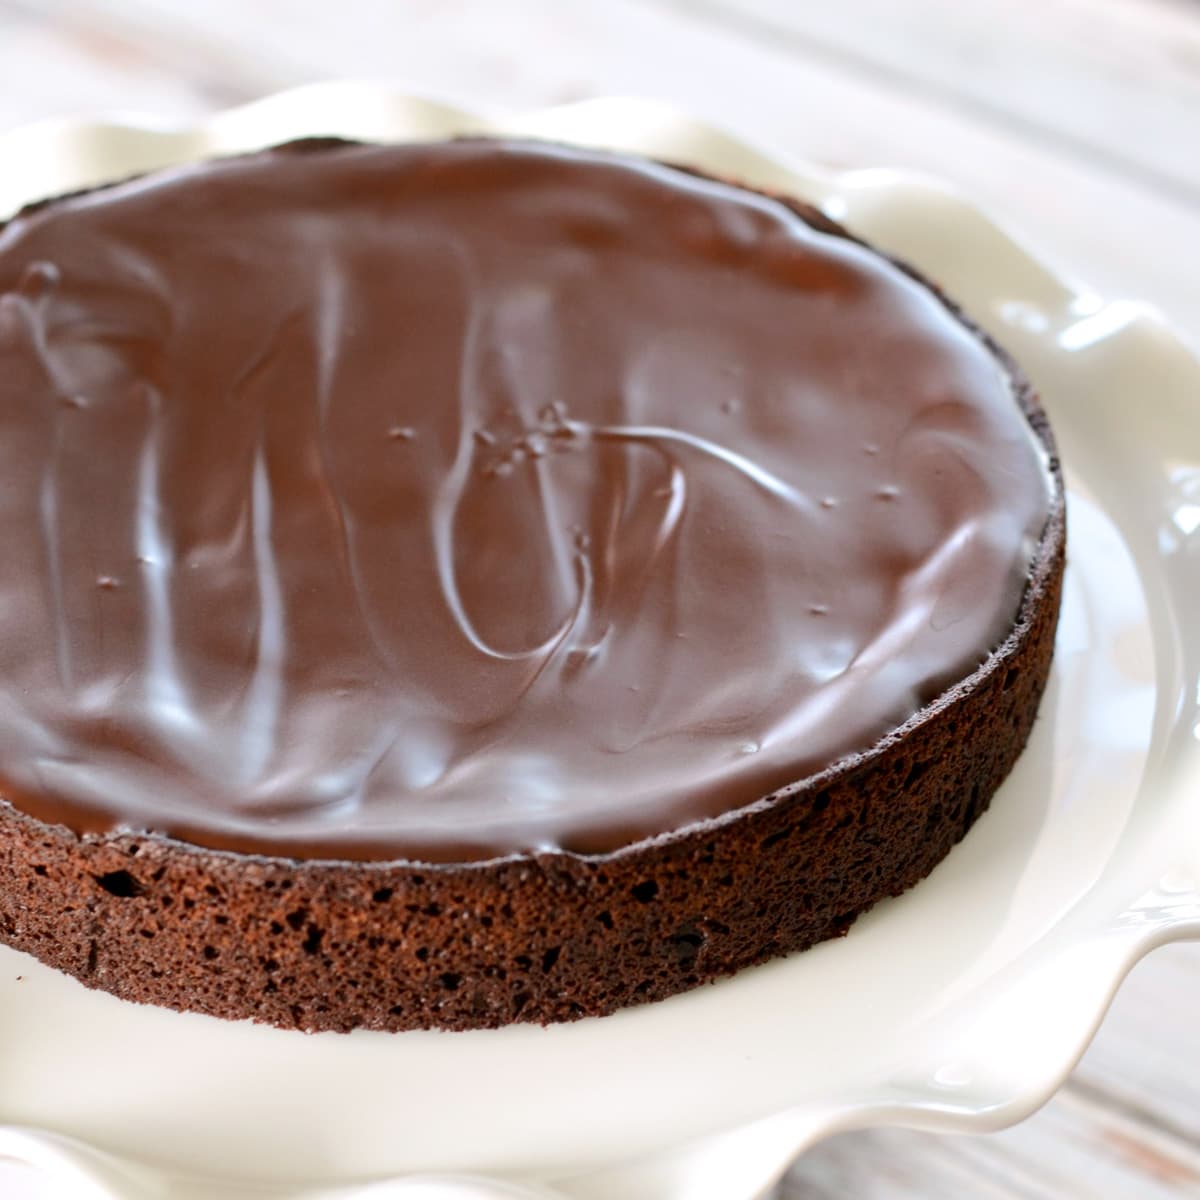 Easy flourless chocolate cake recipe on white cake stand.